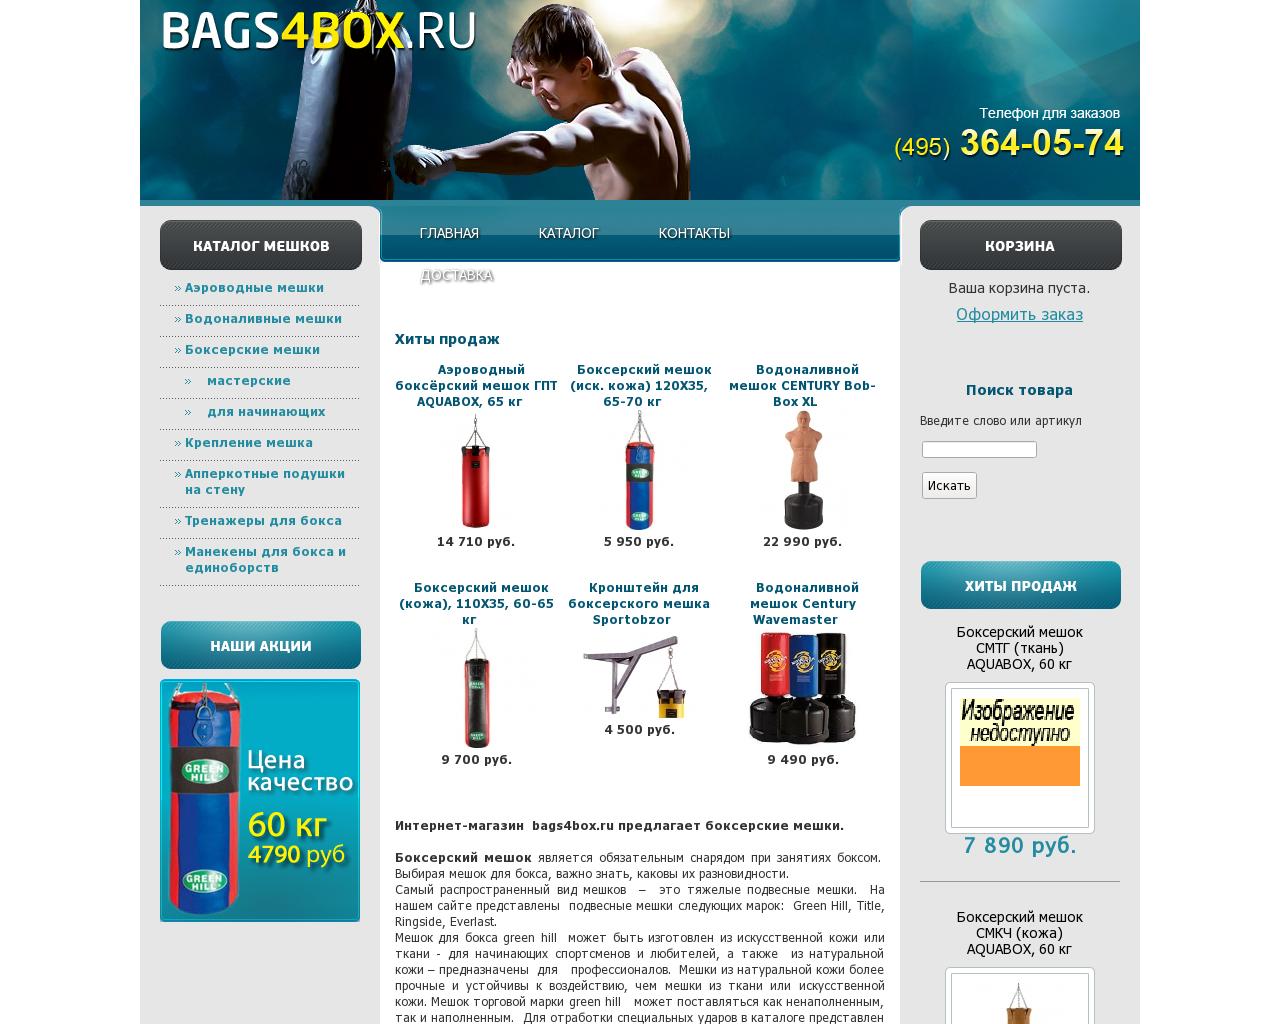 Изображение сайта bags4box.ru в разрешении 1280x1024